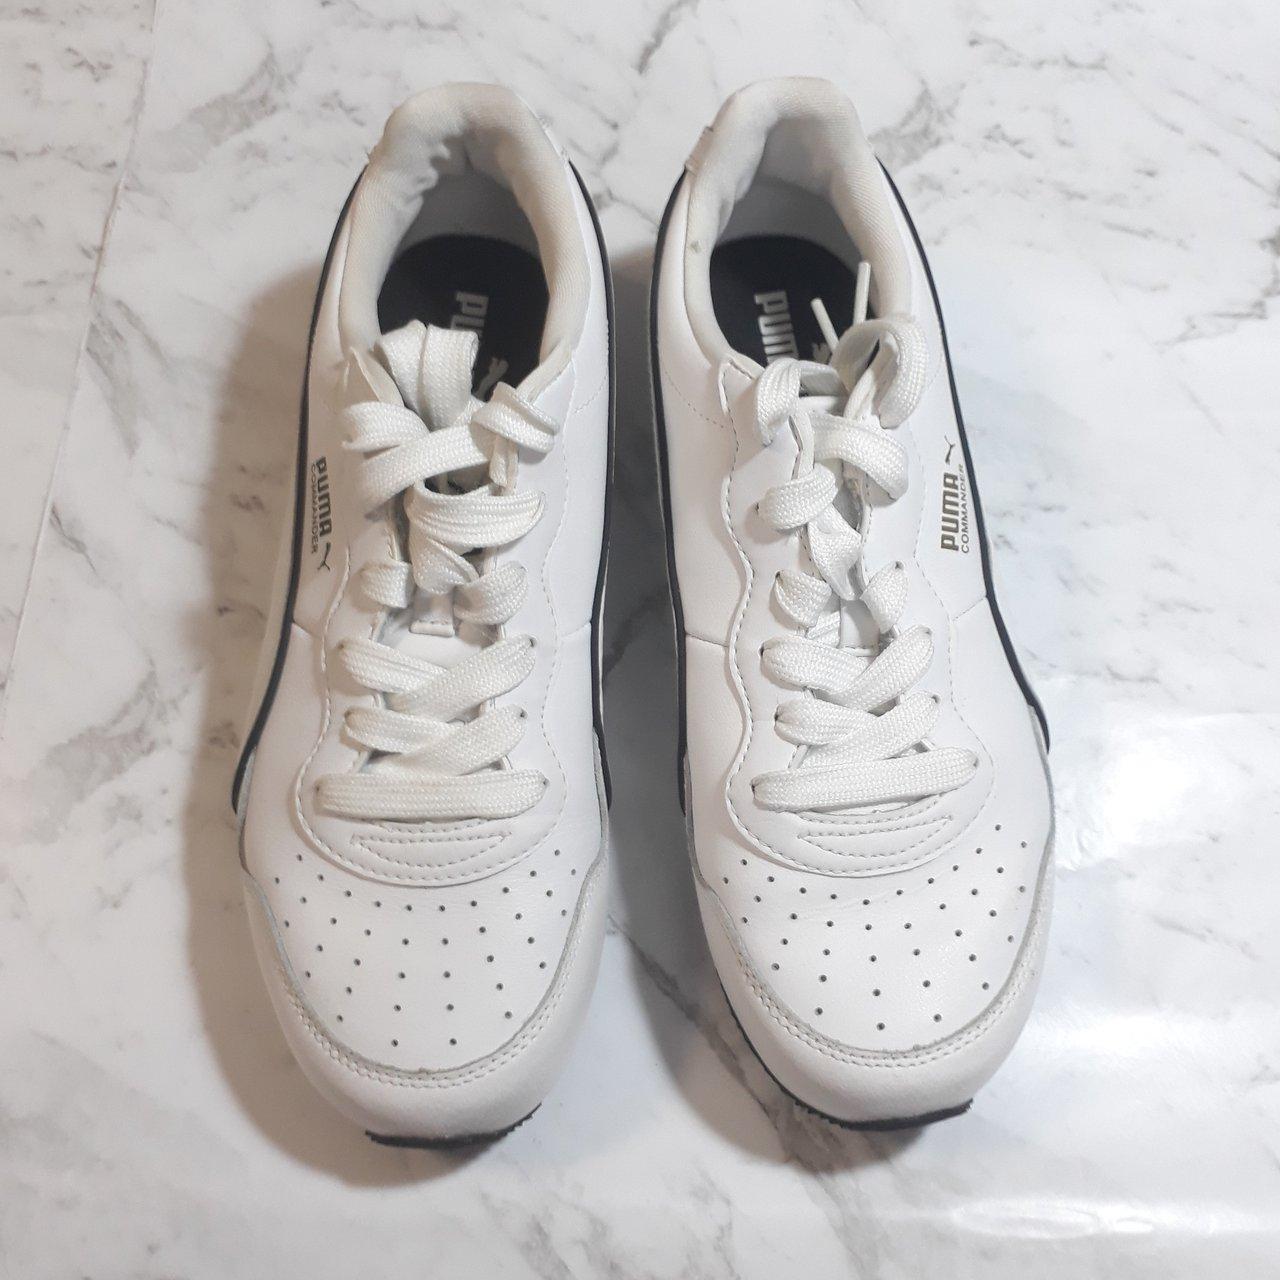 Near new Puma classic white sneakers Details - Near... - Depop